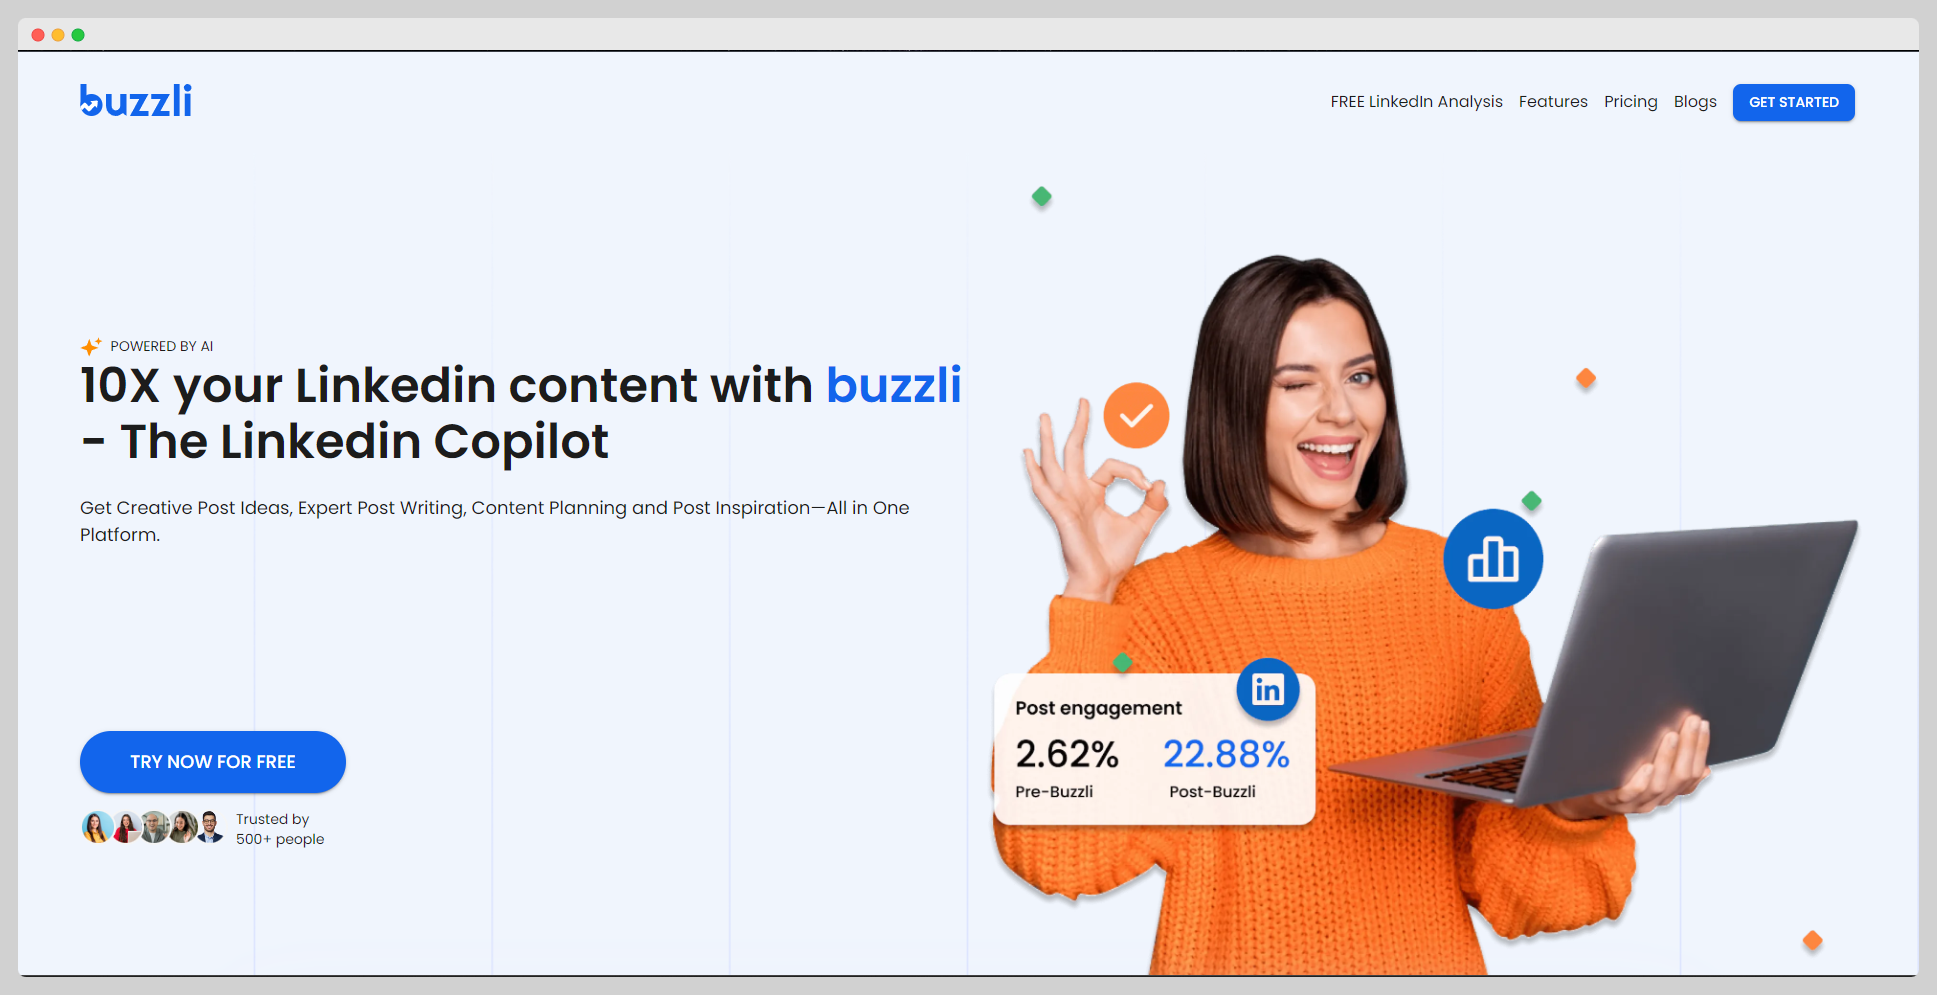 Buzzli - The LinkedIn Co-Pilot